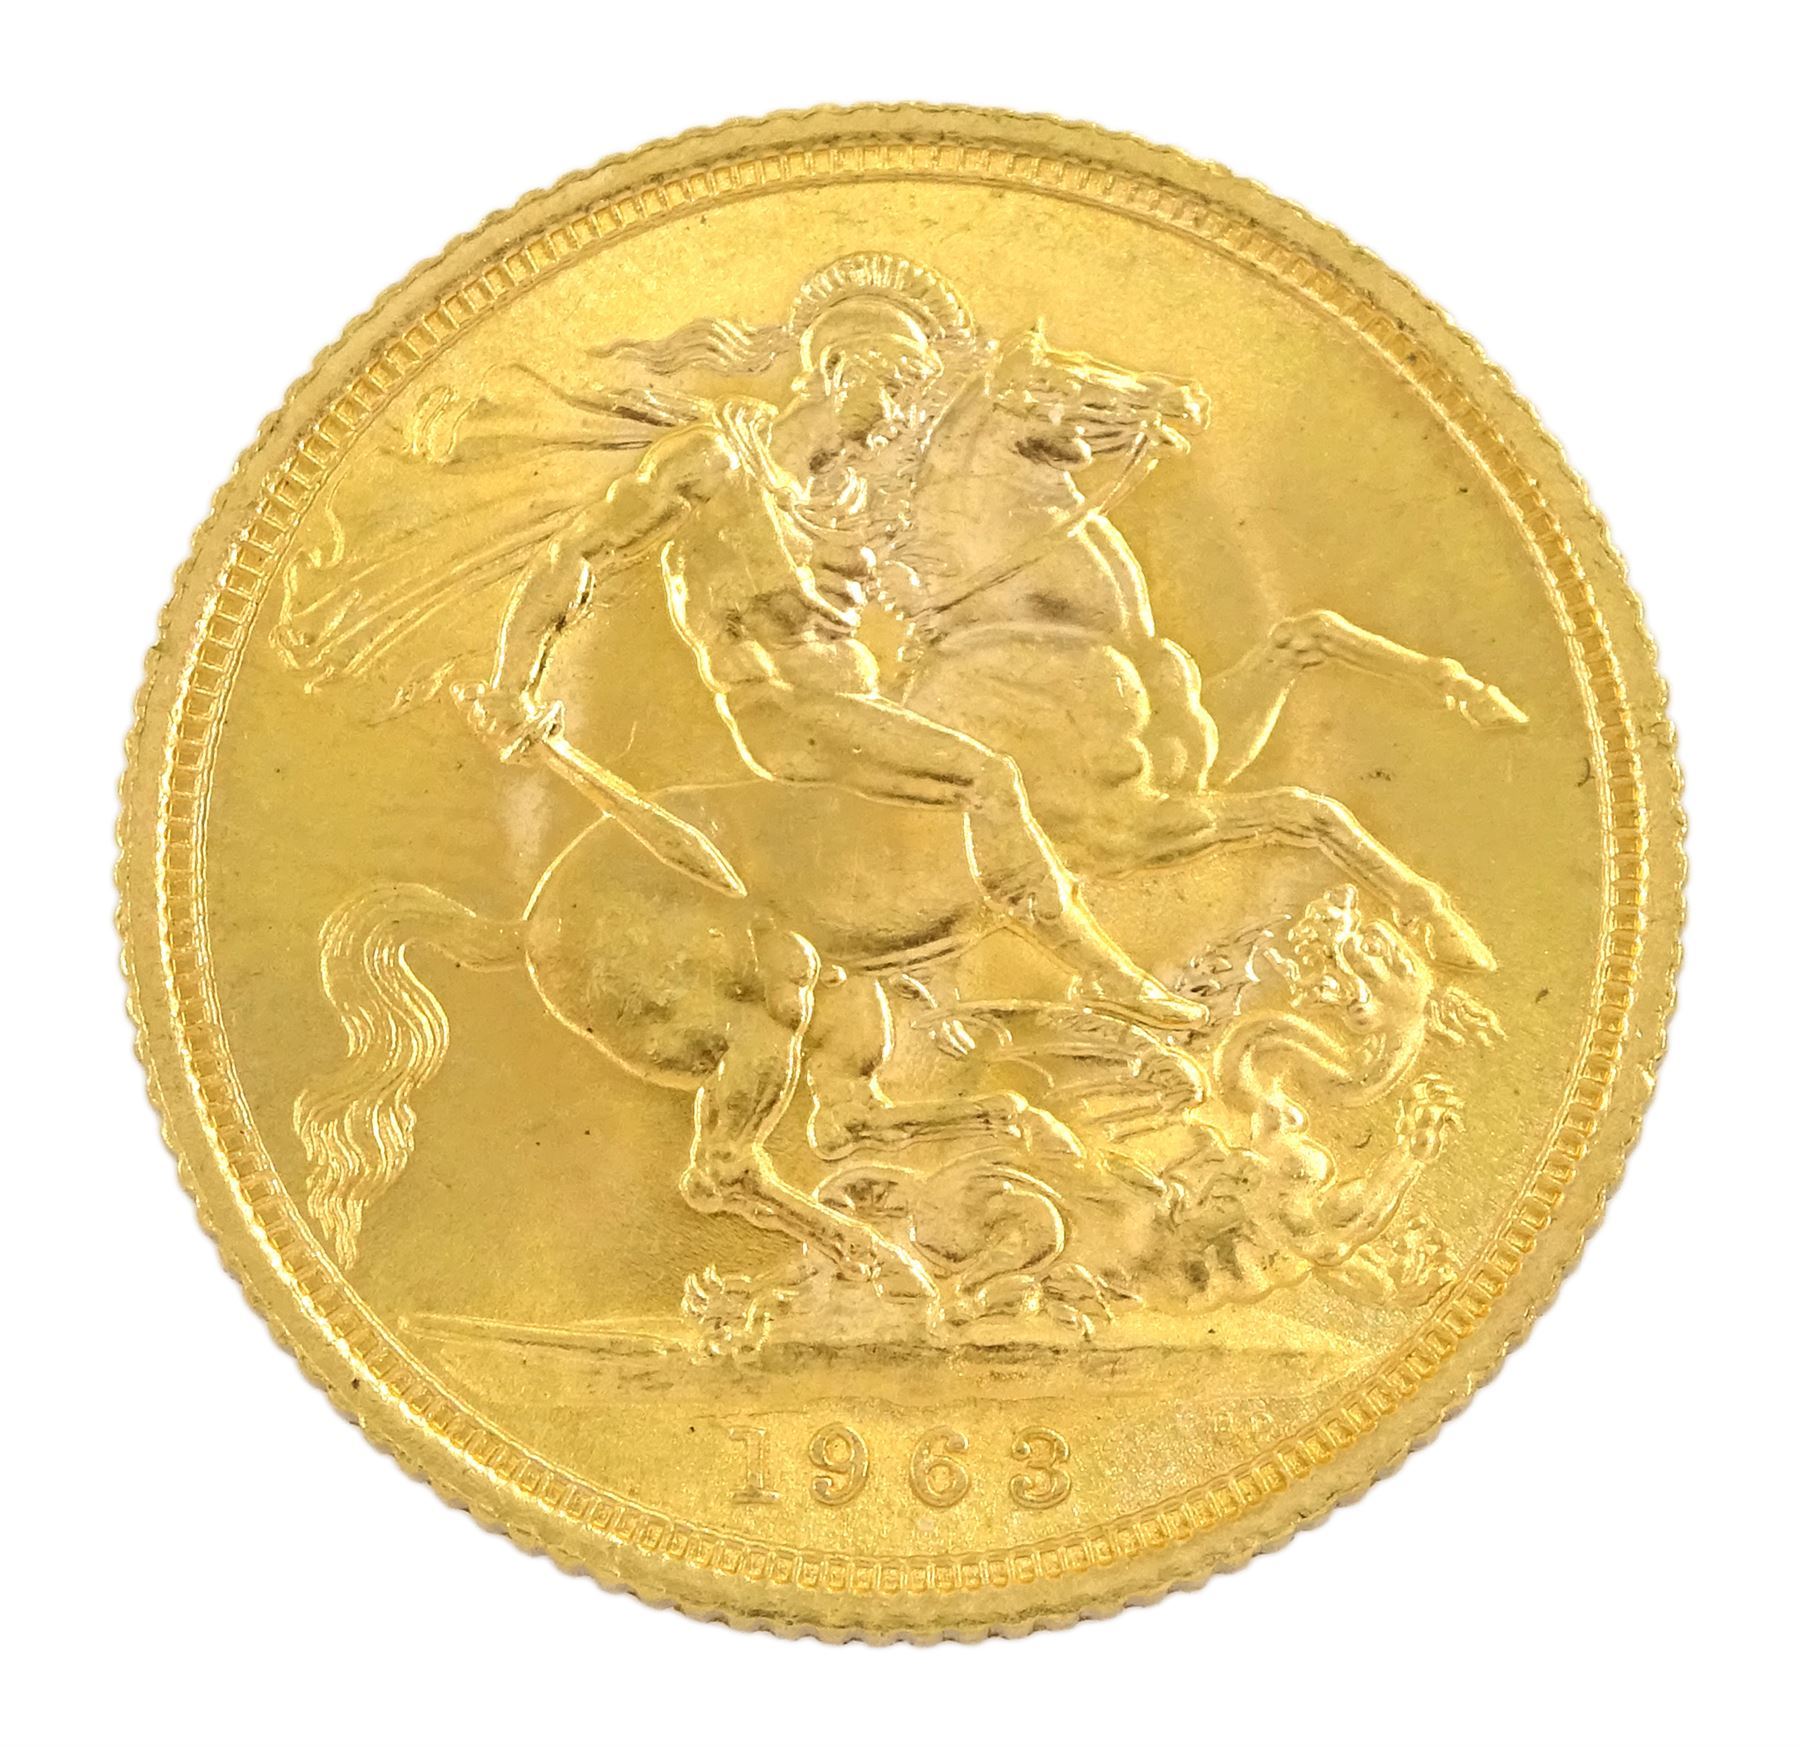 Queen Elizabeth II 1963 gold full sovereign coin - Image 2 of 3